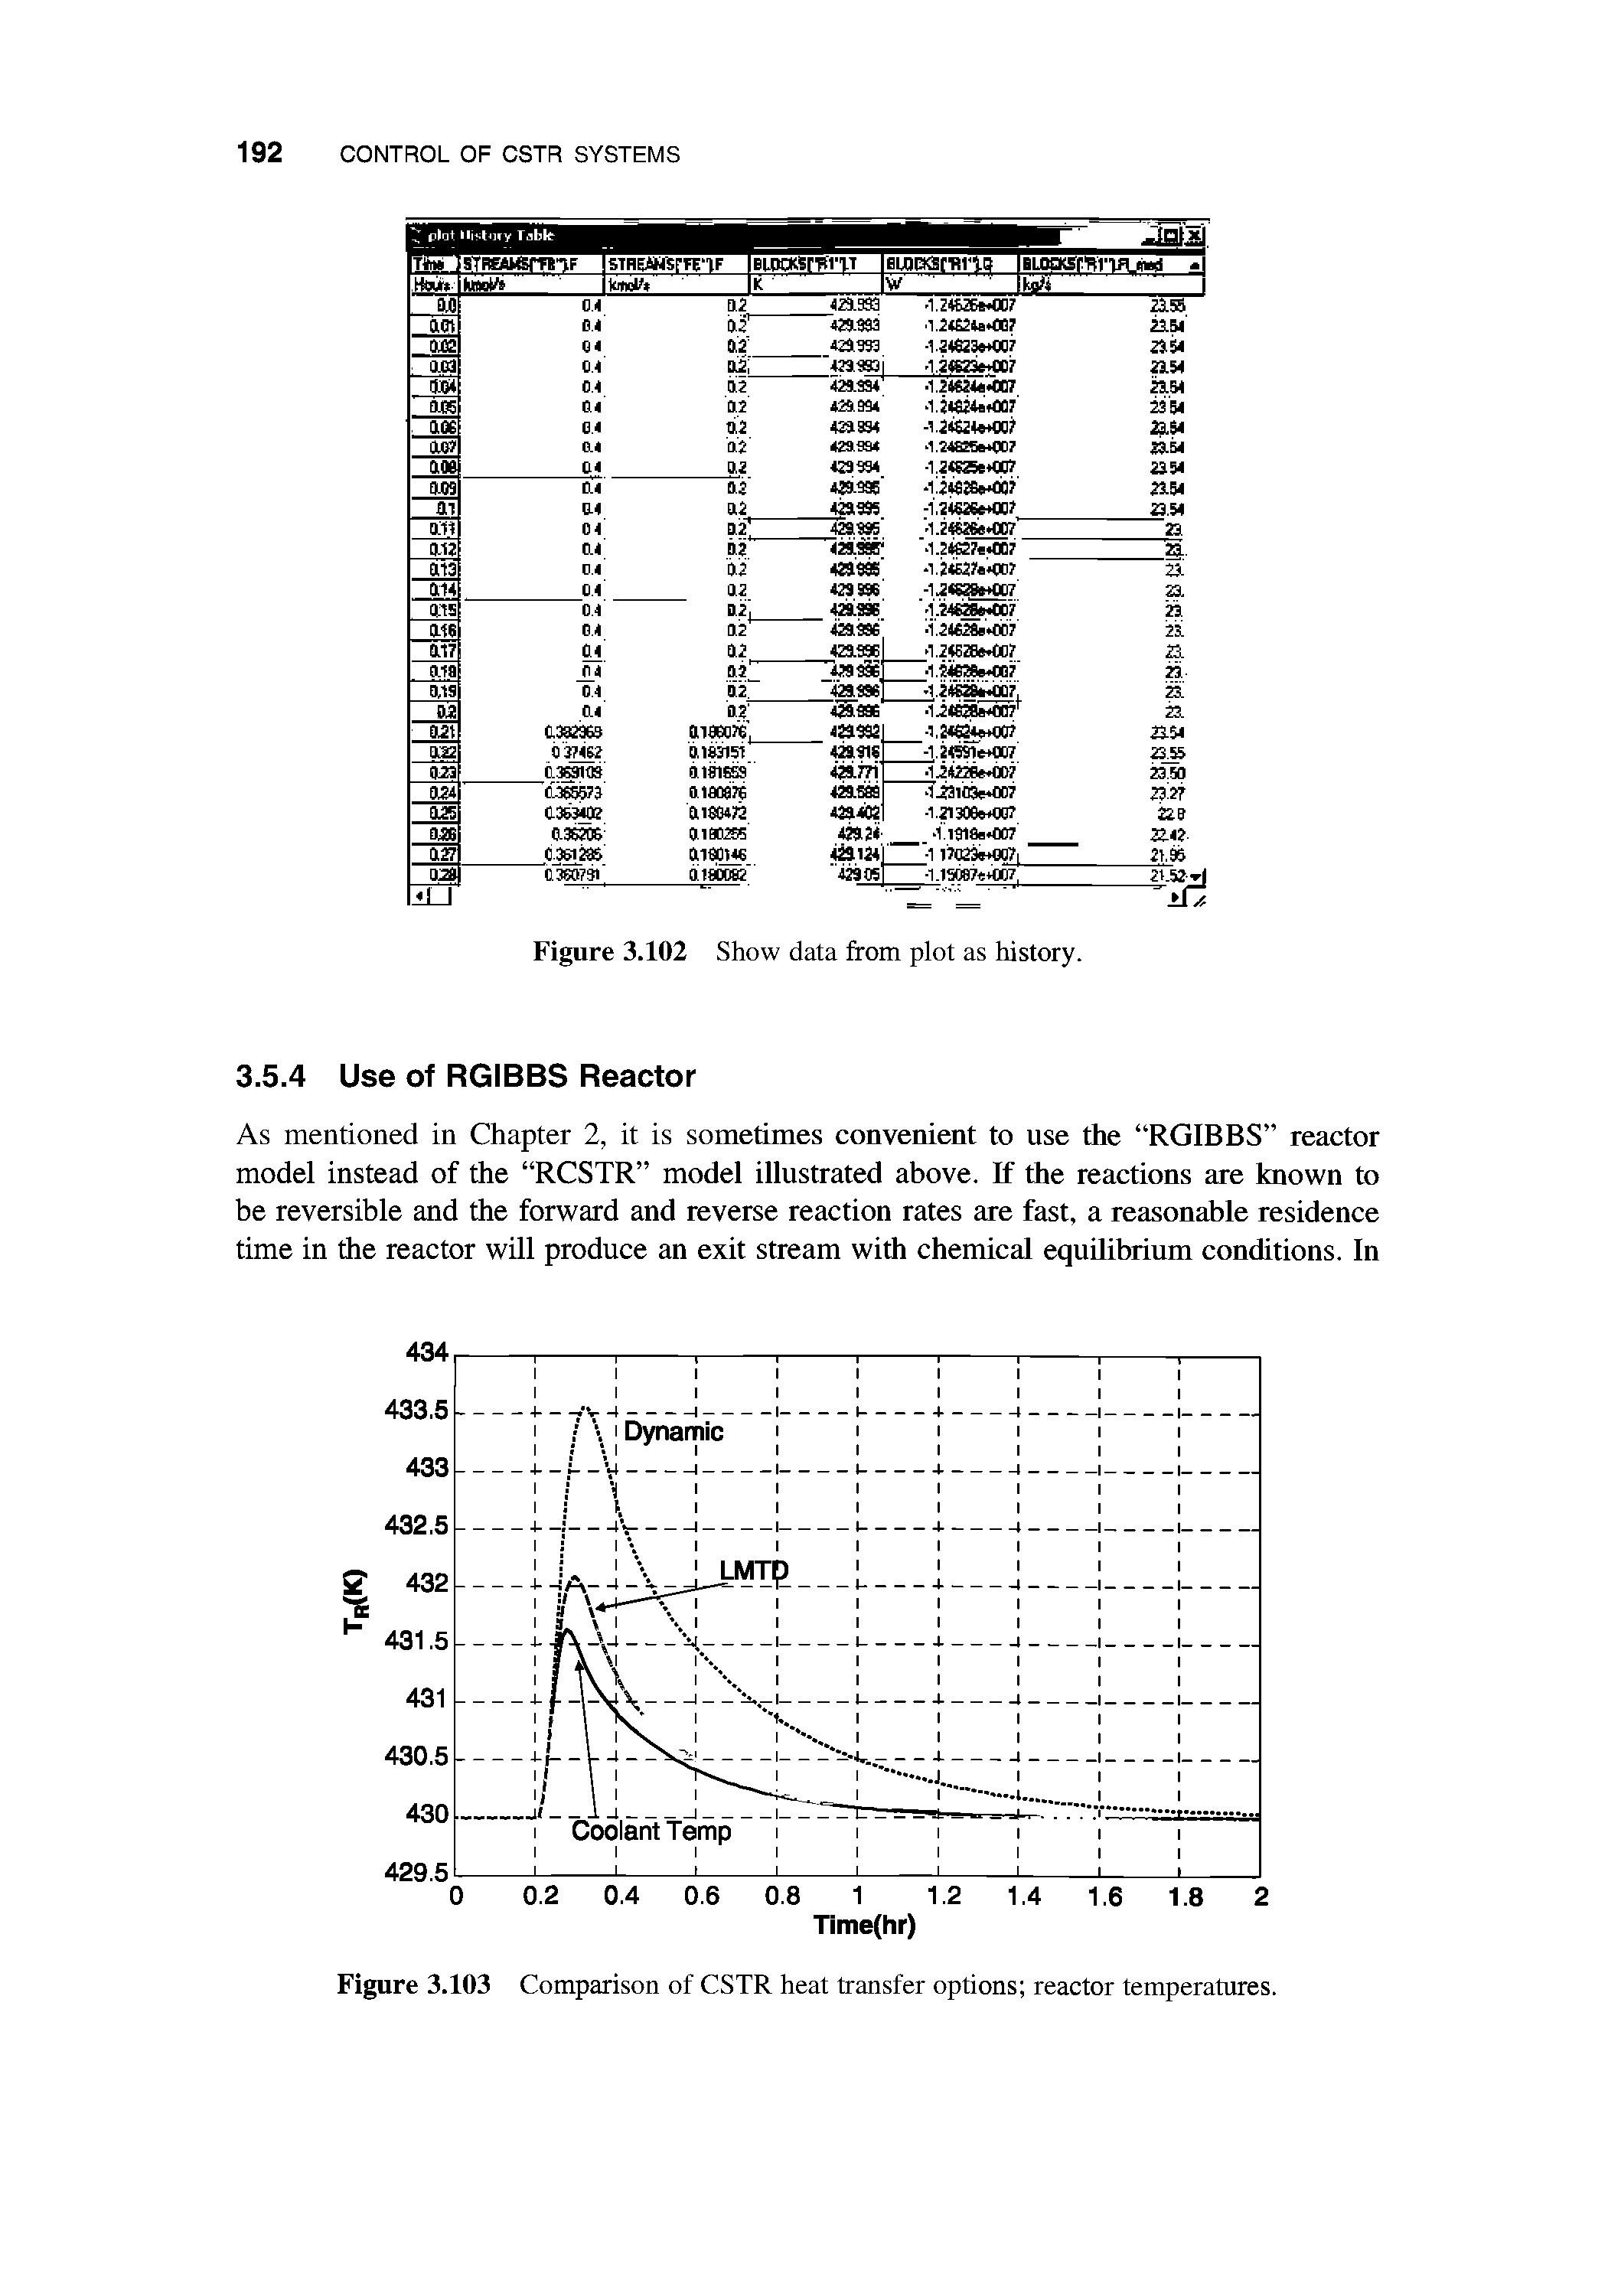 Figure 3.103 Comparison of CSTR heat transfer options reactor temperatures.